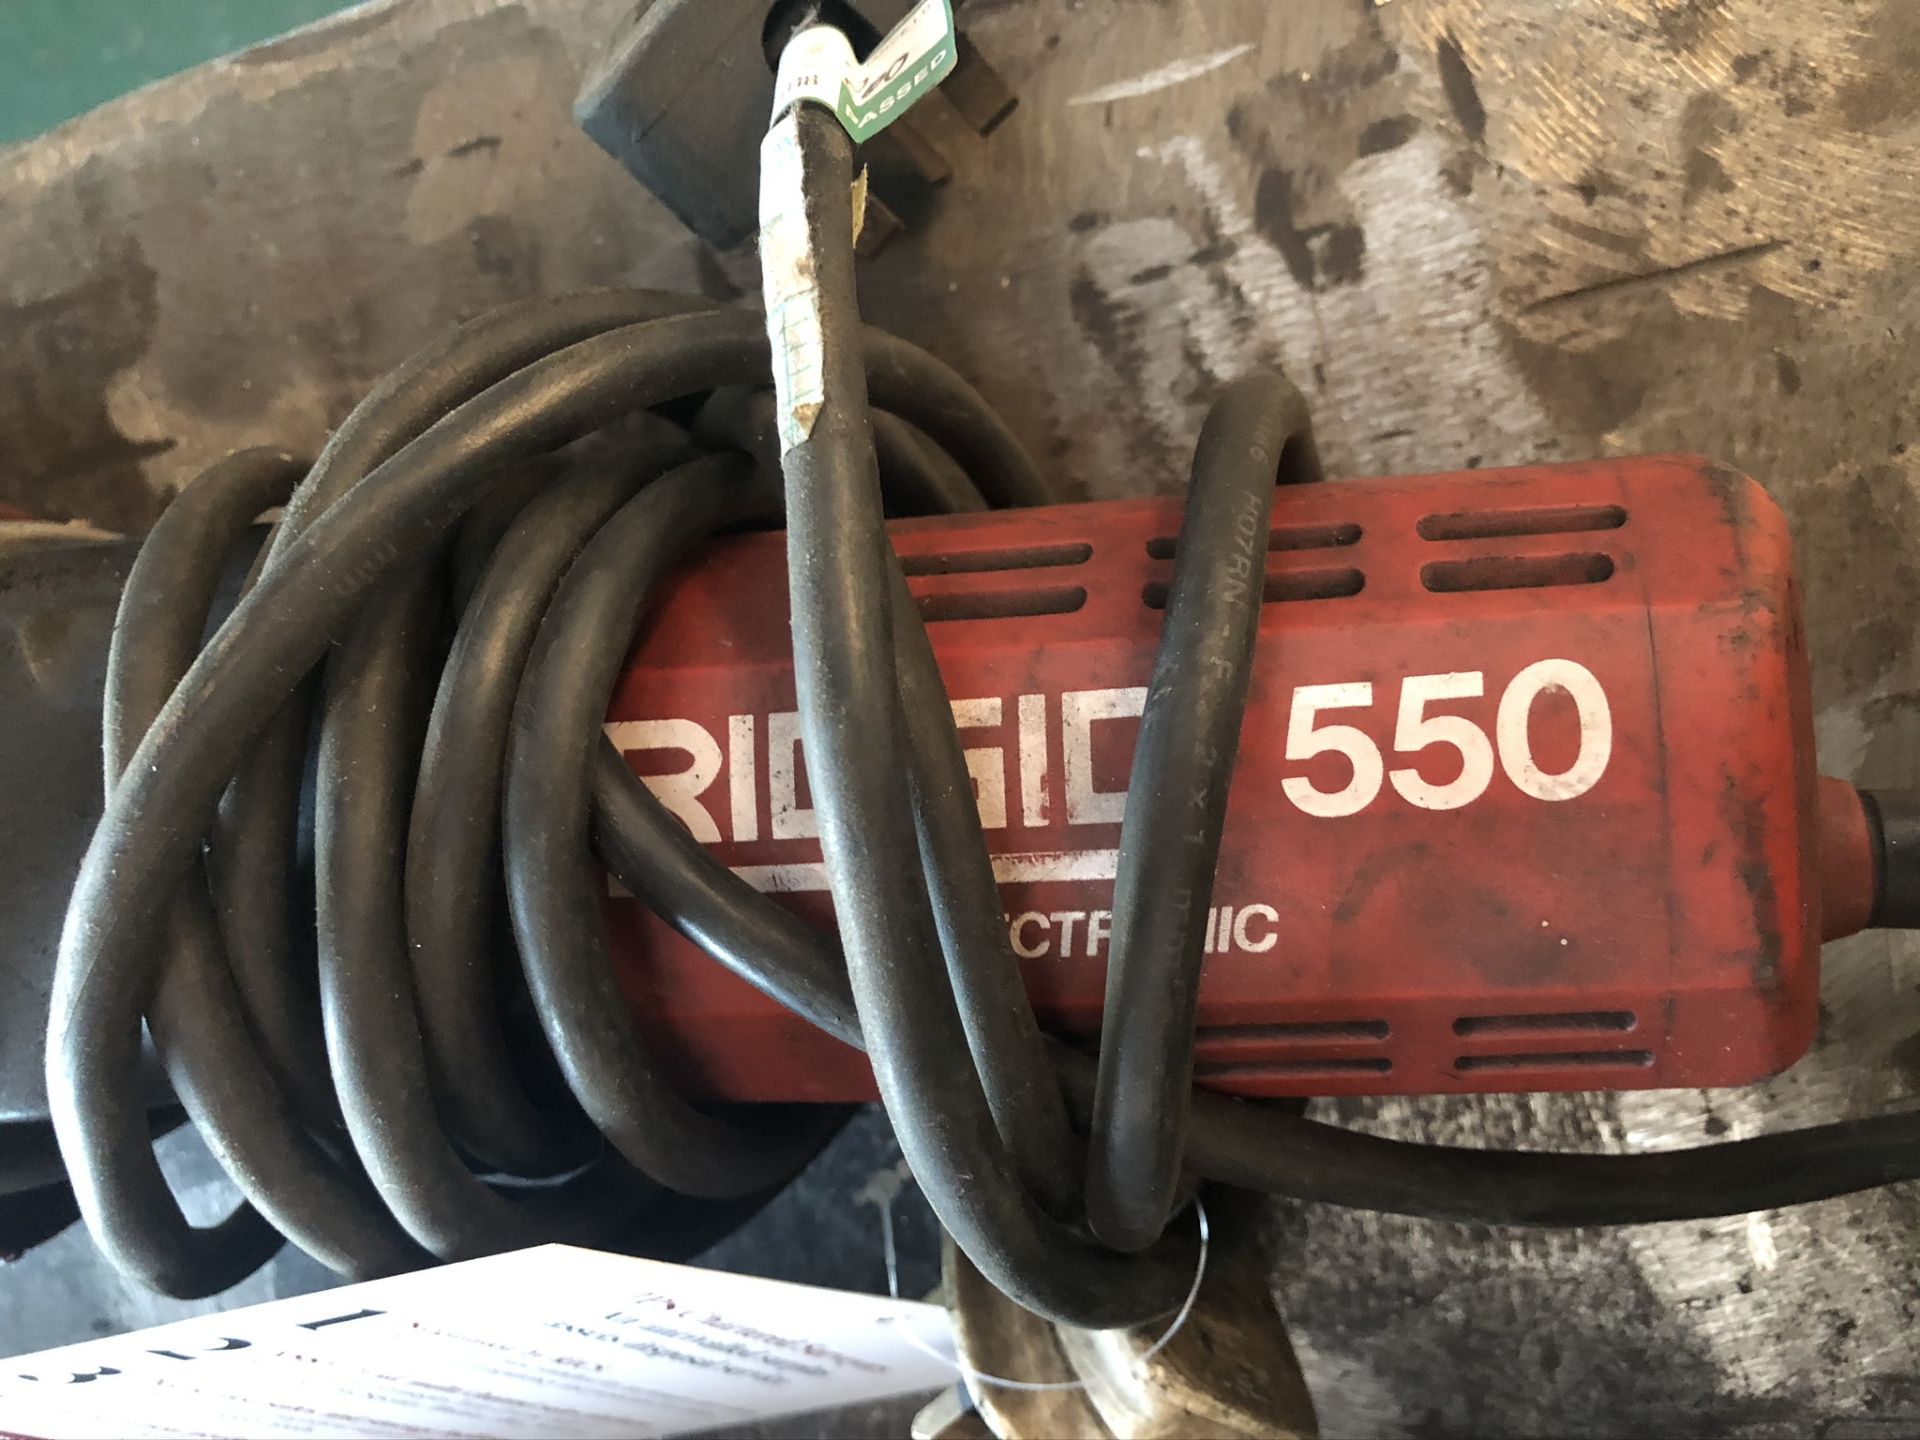 Ridgid 550 Electric Reciprocating Saw - Image 4 of 4